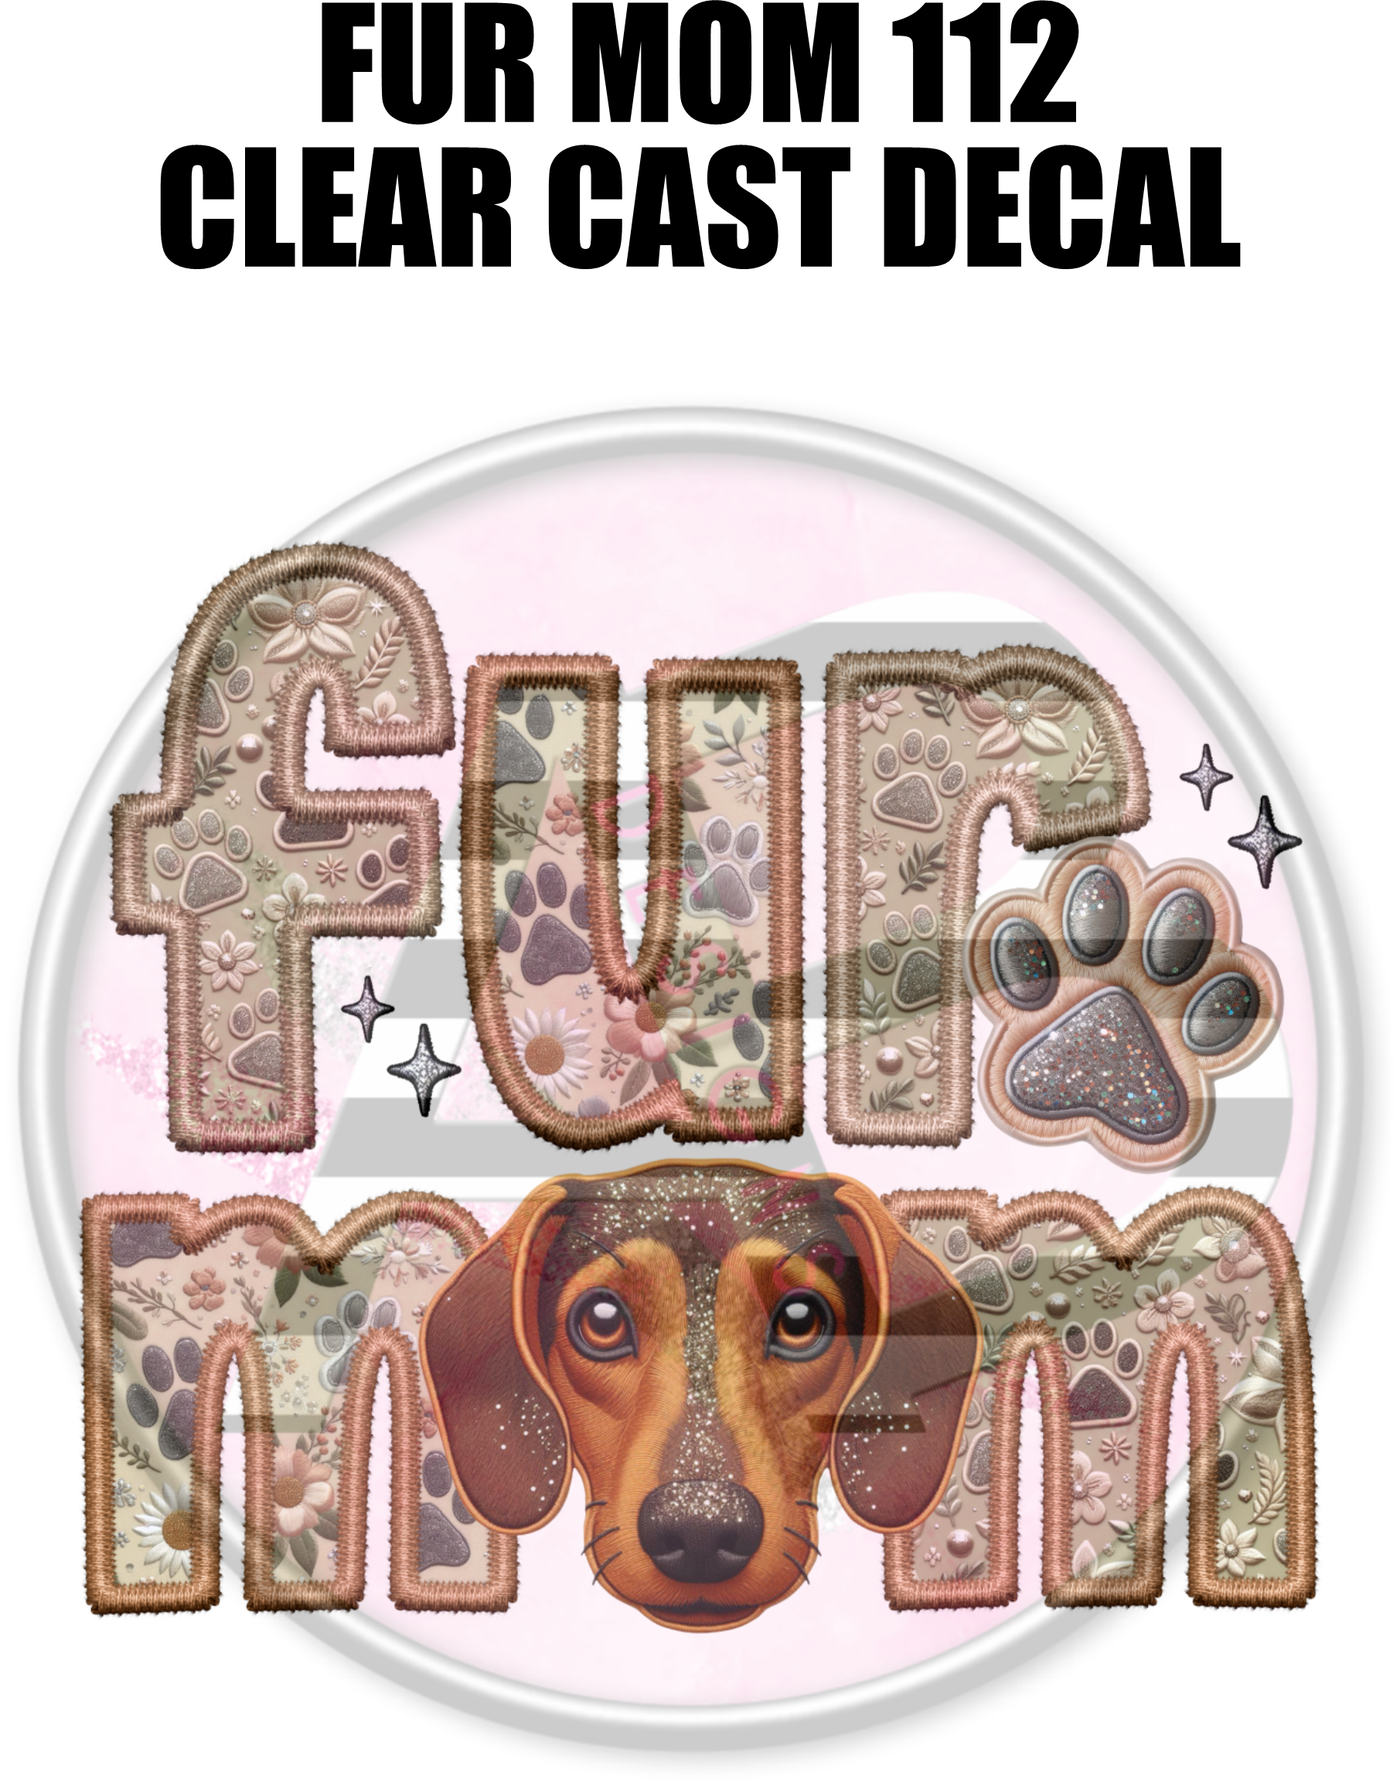 Fur Mom 112 - Clear Cast Decal